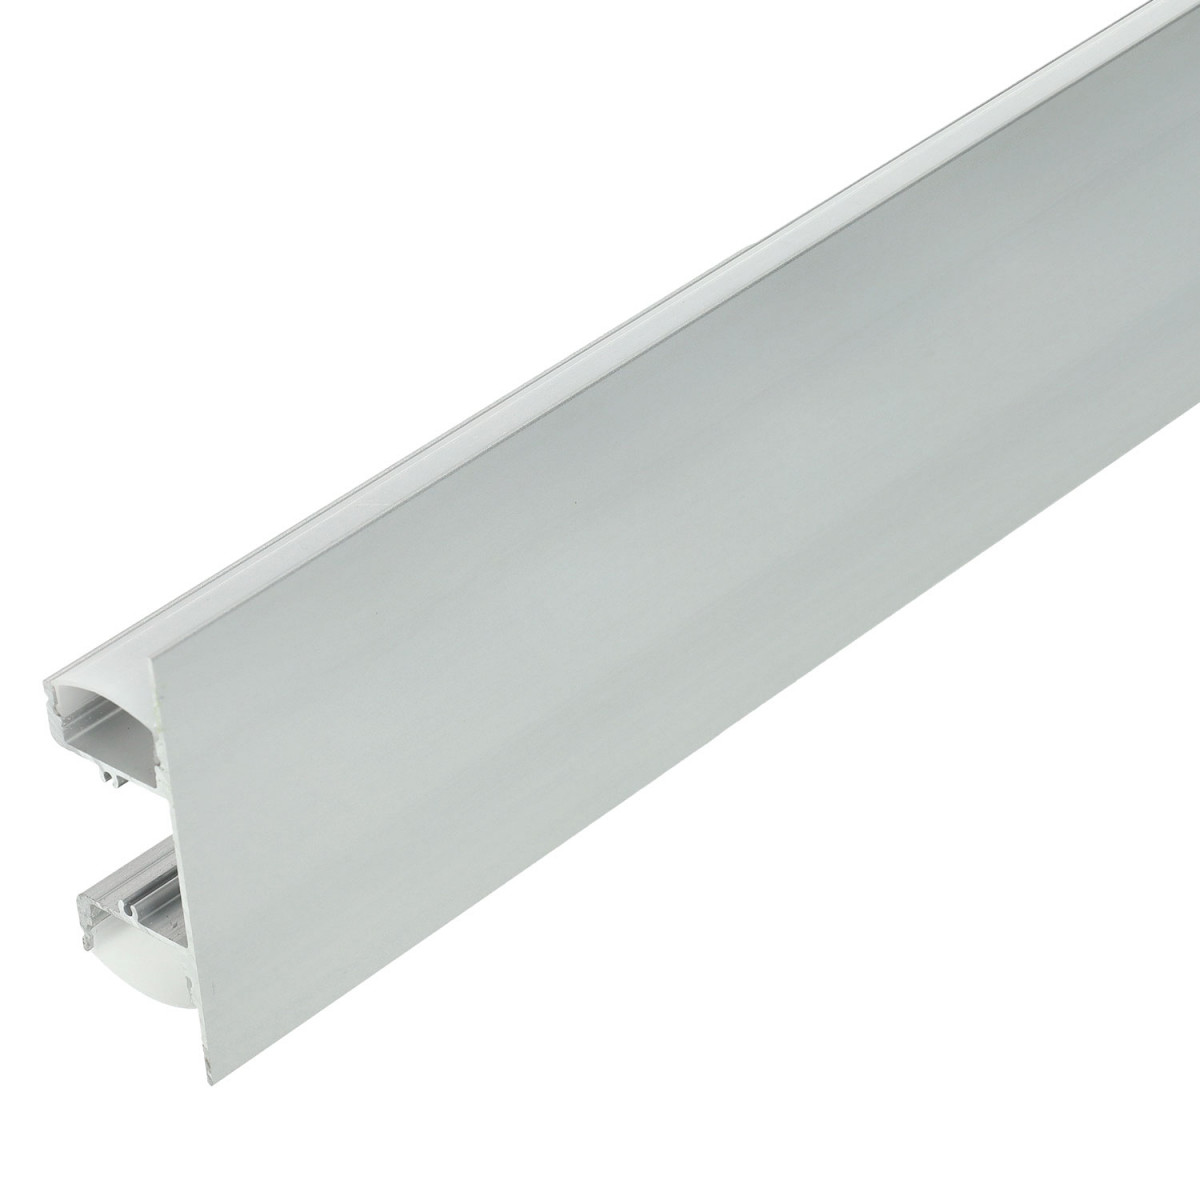 Perfil aluminio tira led iluminación lateral doble